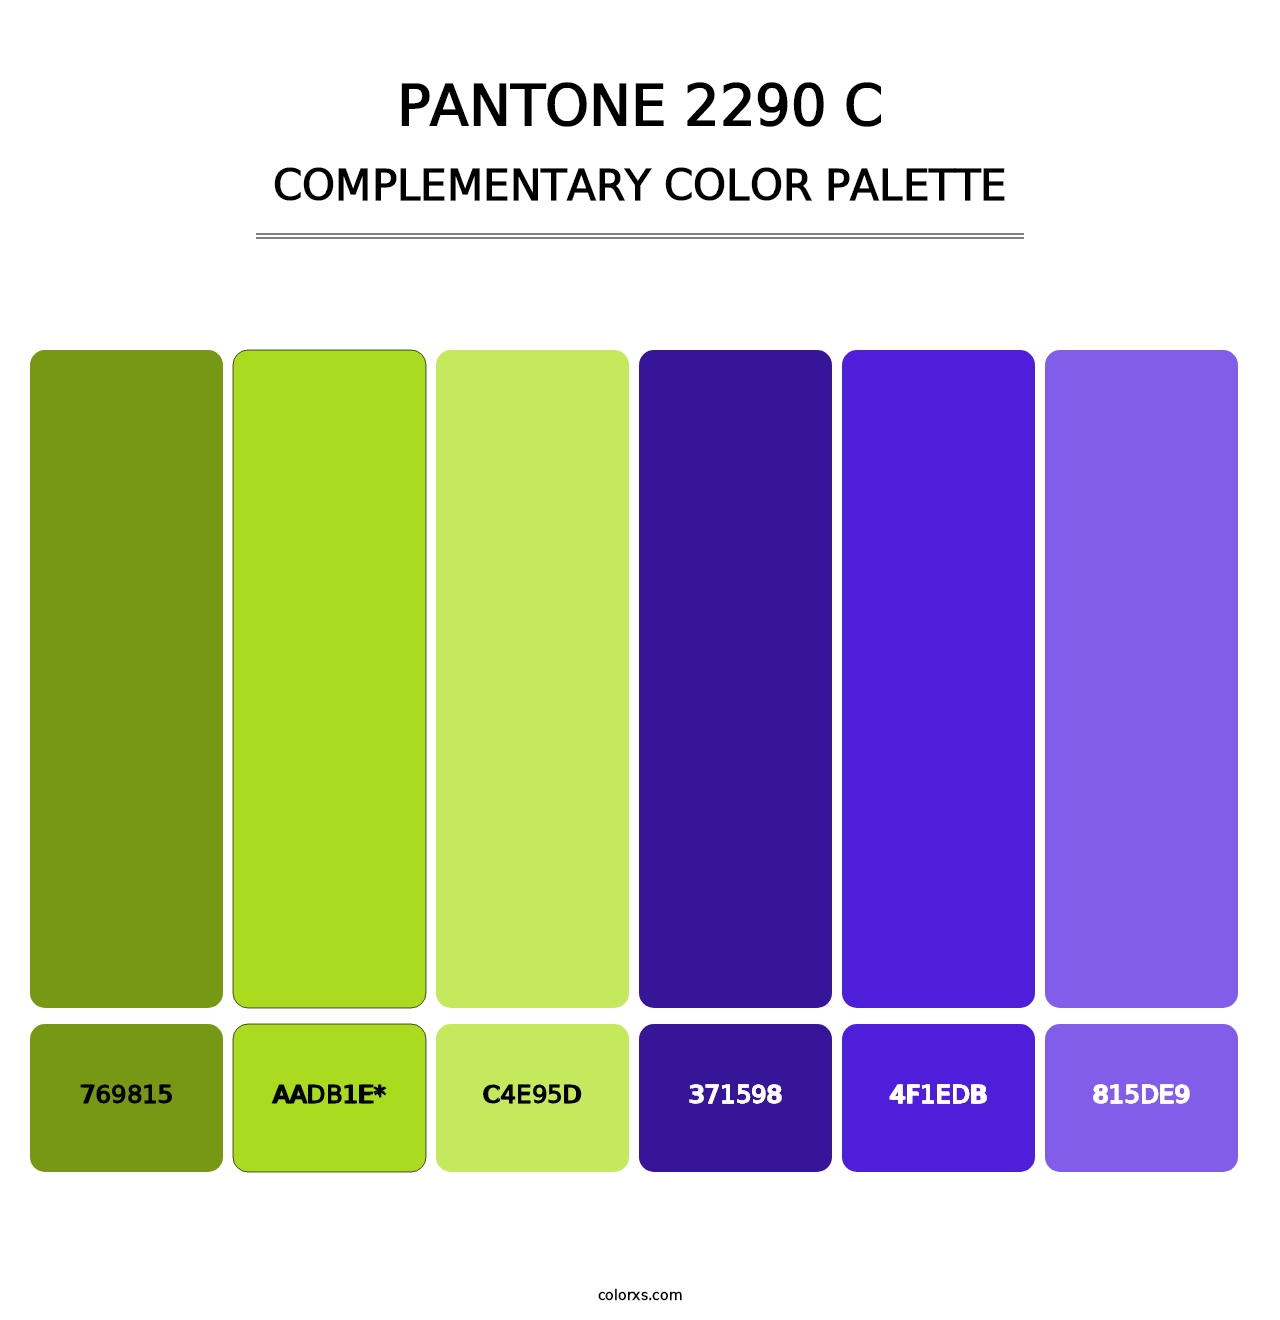 PANTONE 2290 C - Complementary Color Palette